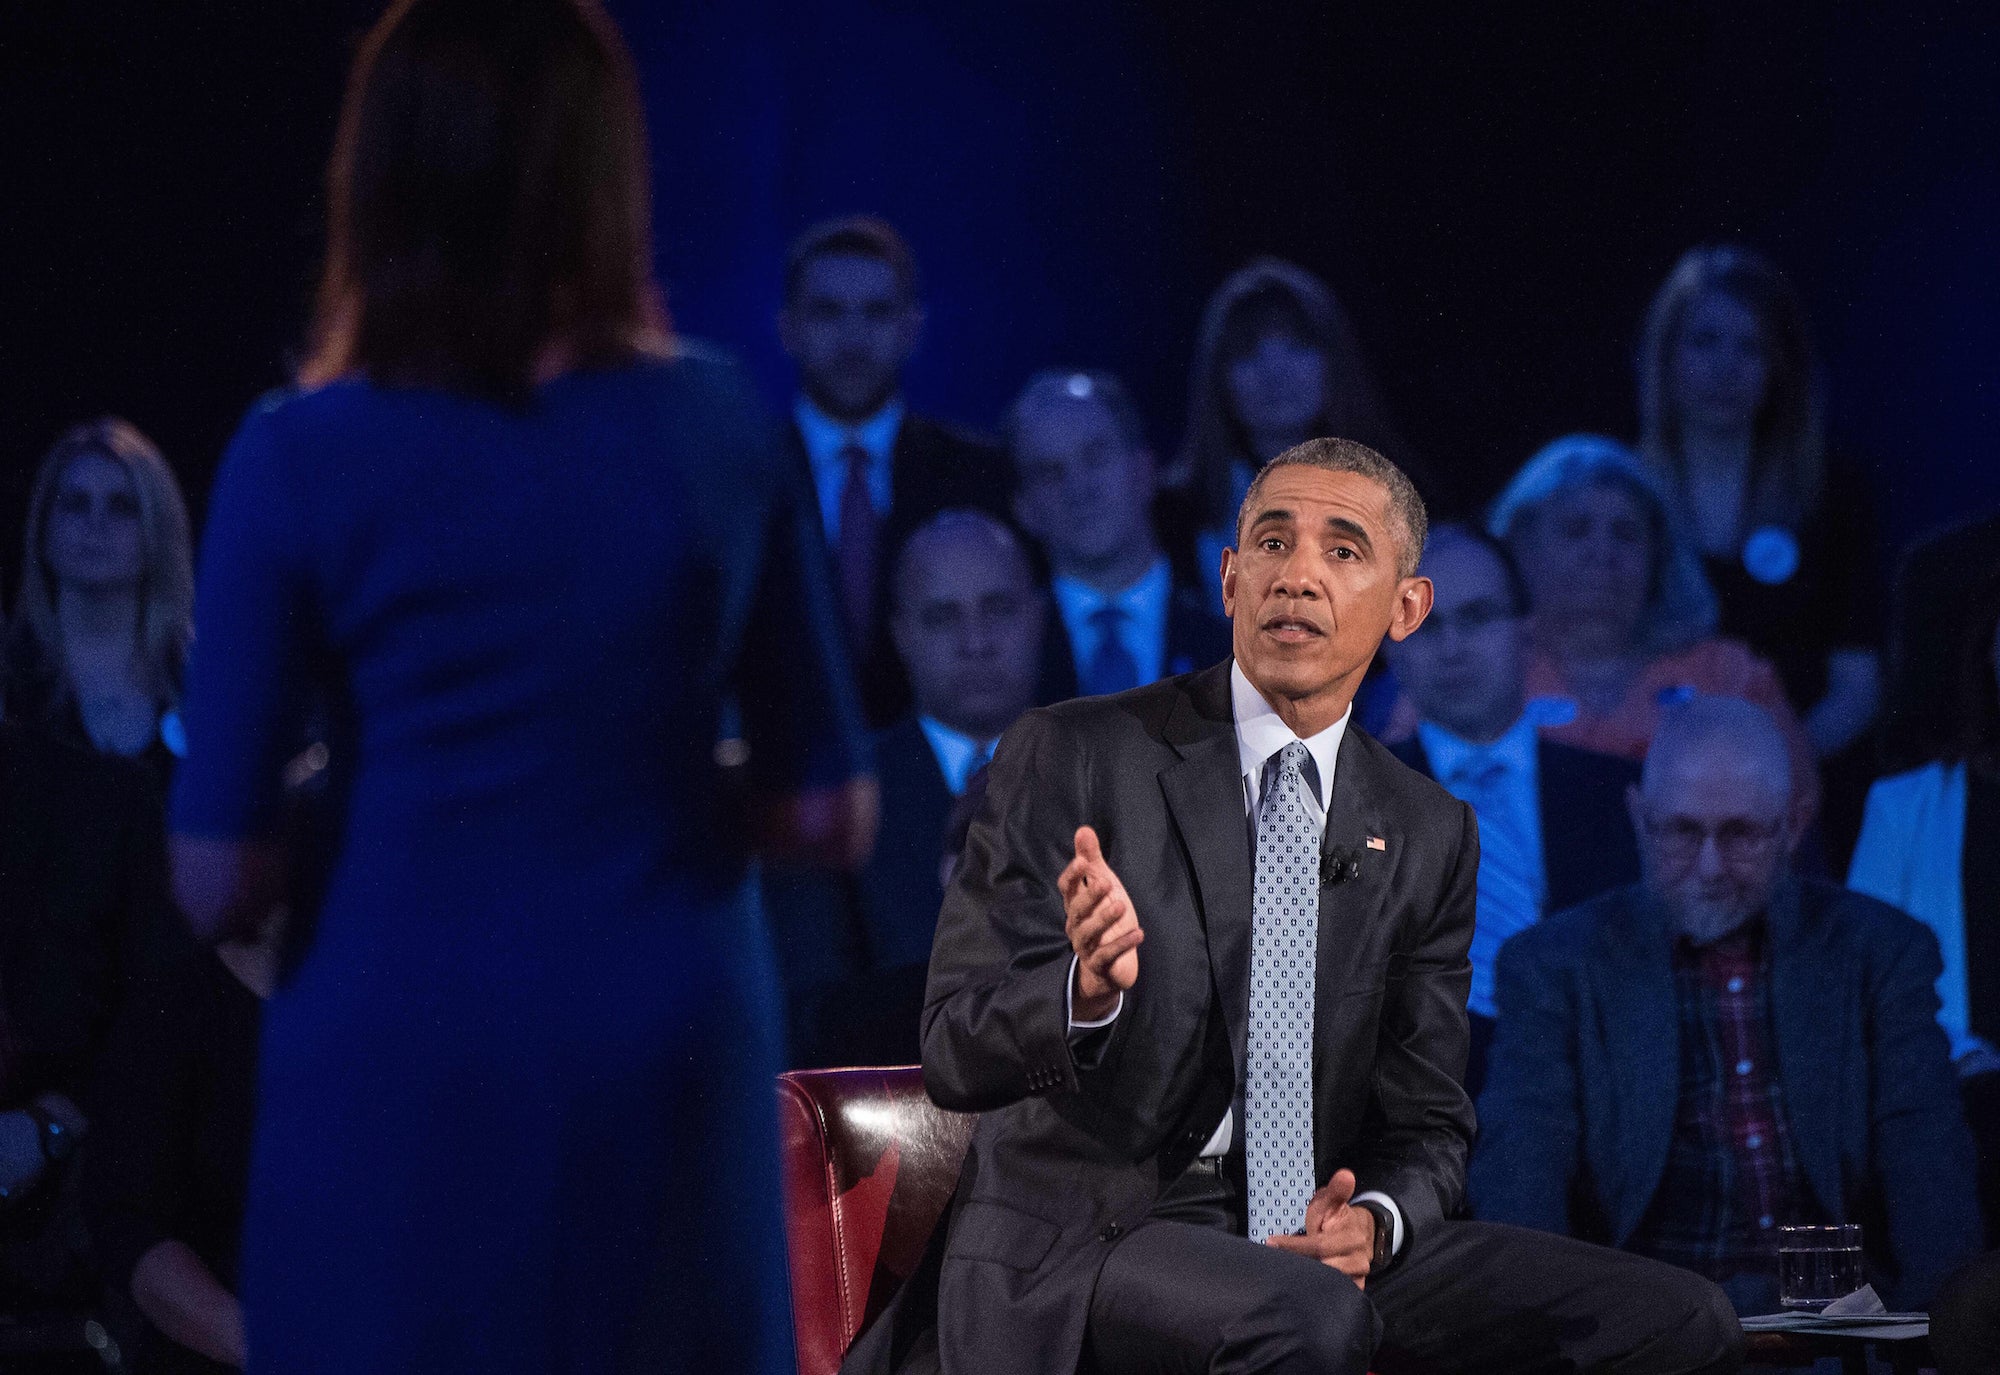 Barack Obama answers questions at George Mason University.